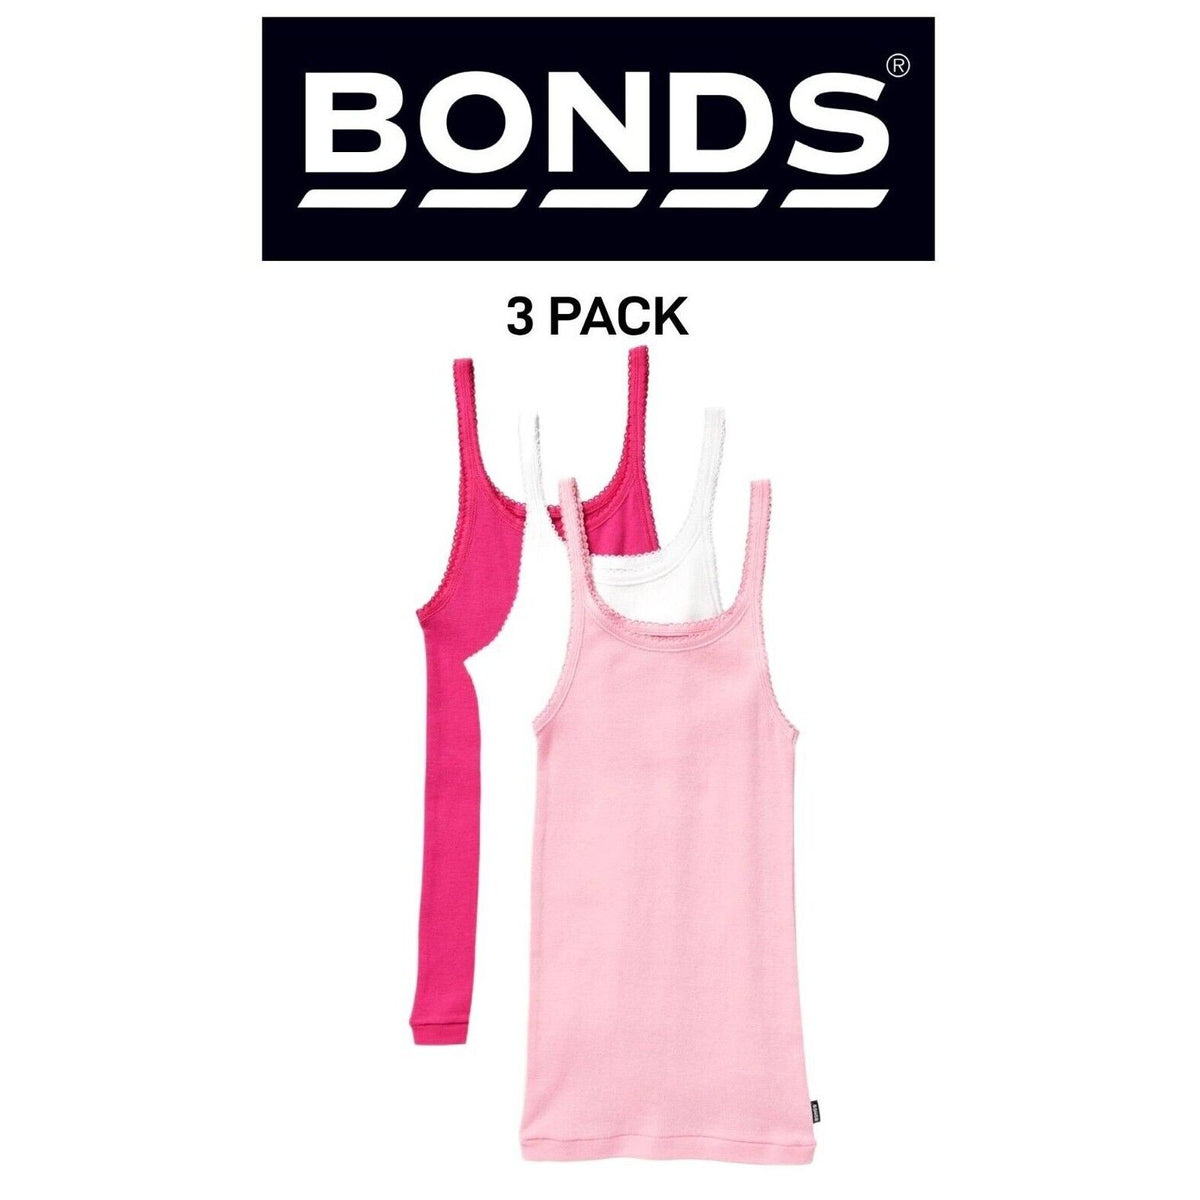 Bonds Girls Teena Singlet Super Soft Cotton Comfortable Top 3 Pack UYG43W